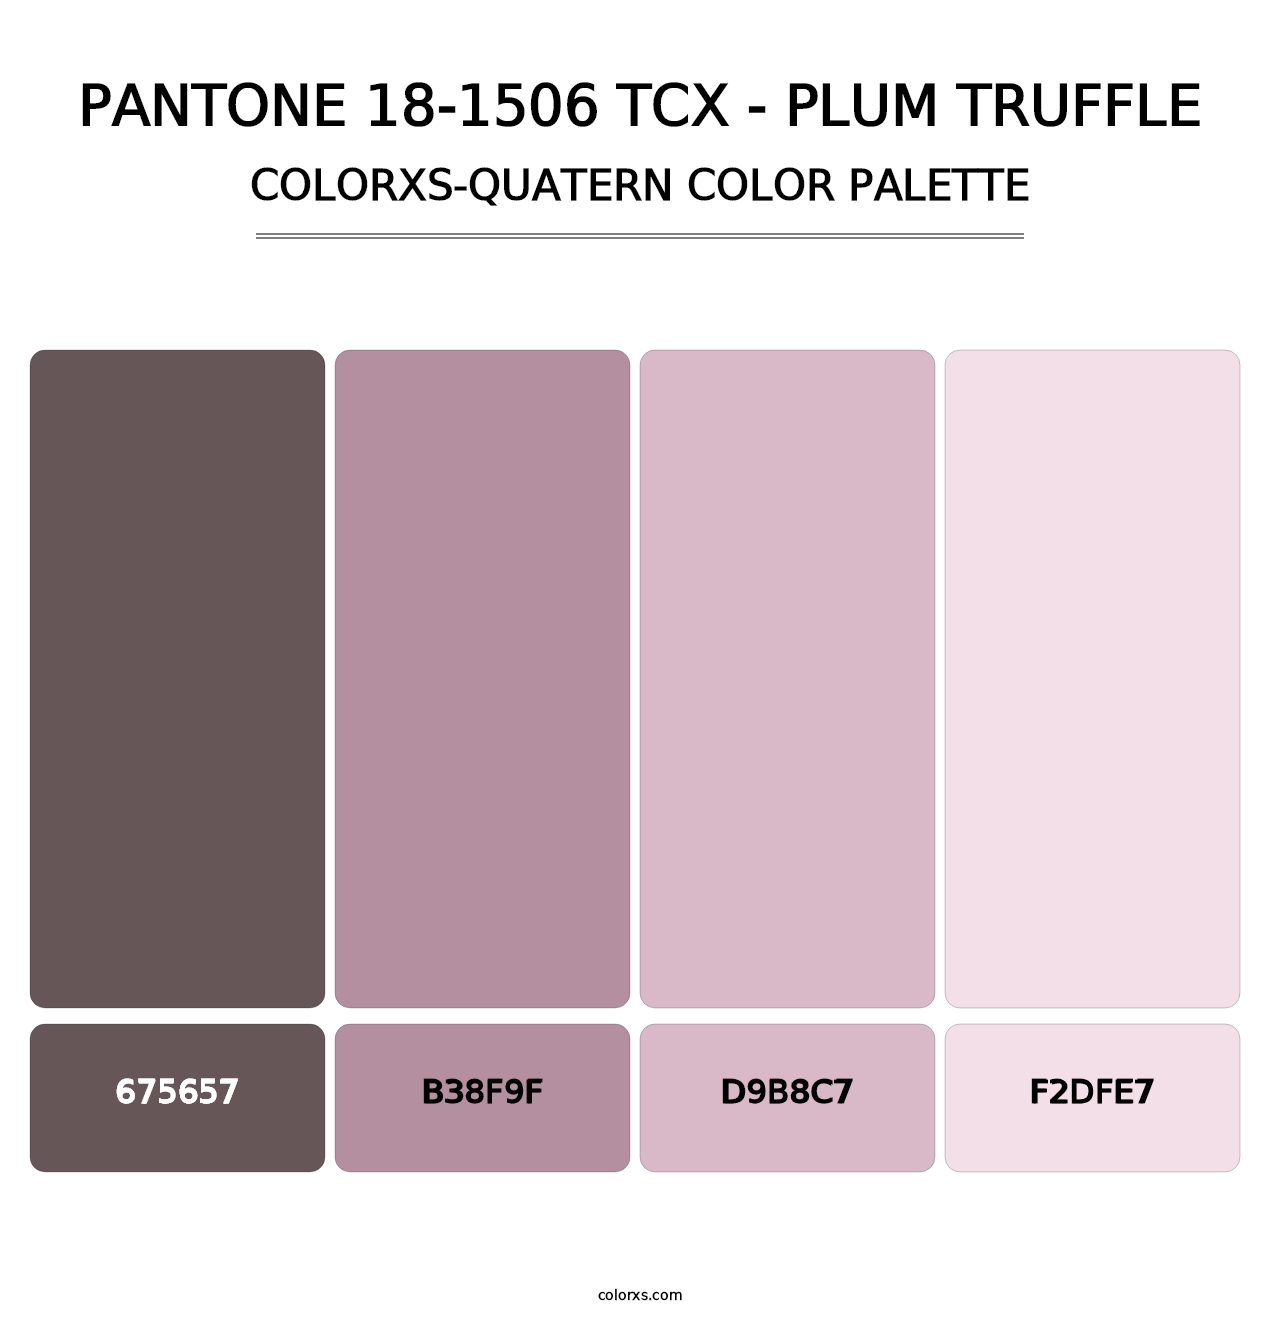 PANTONE 18-1506 TCX - Plum Truffle - Colorxs Quatern Palette